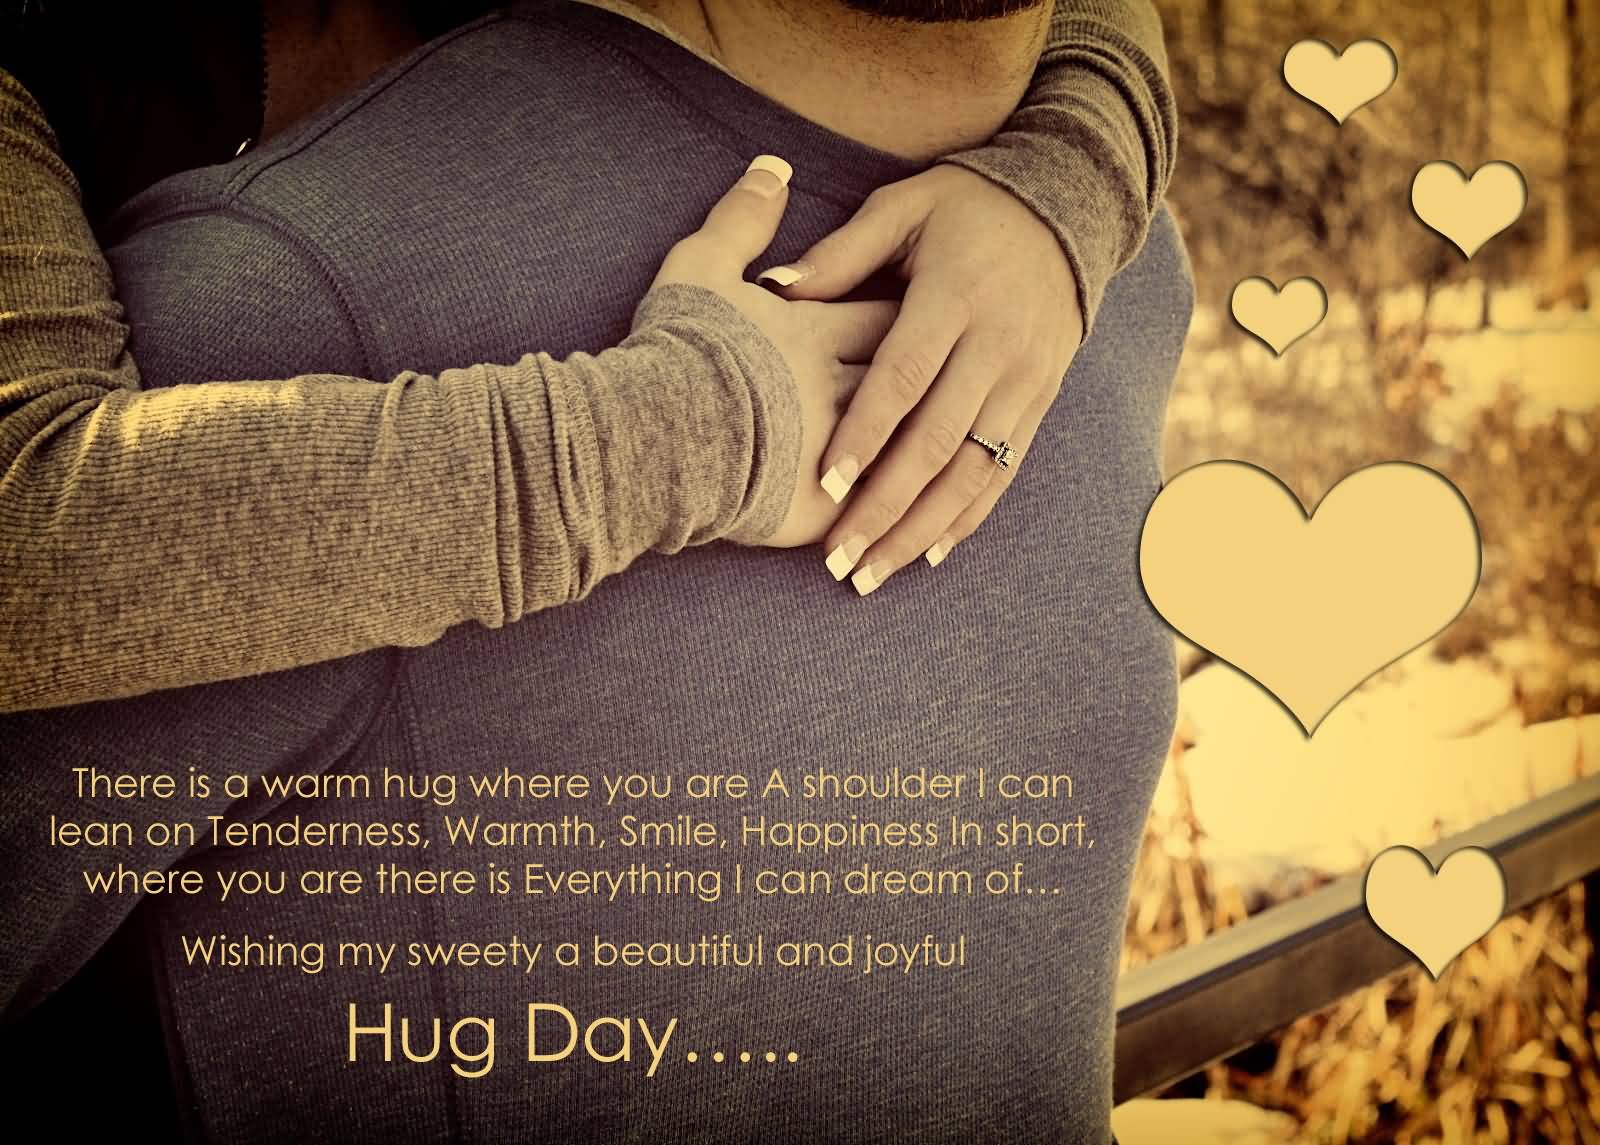 Wishing My Sweety A Beautiful And Joyful Hug Day